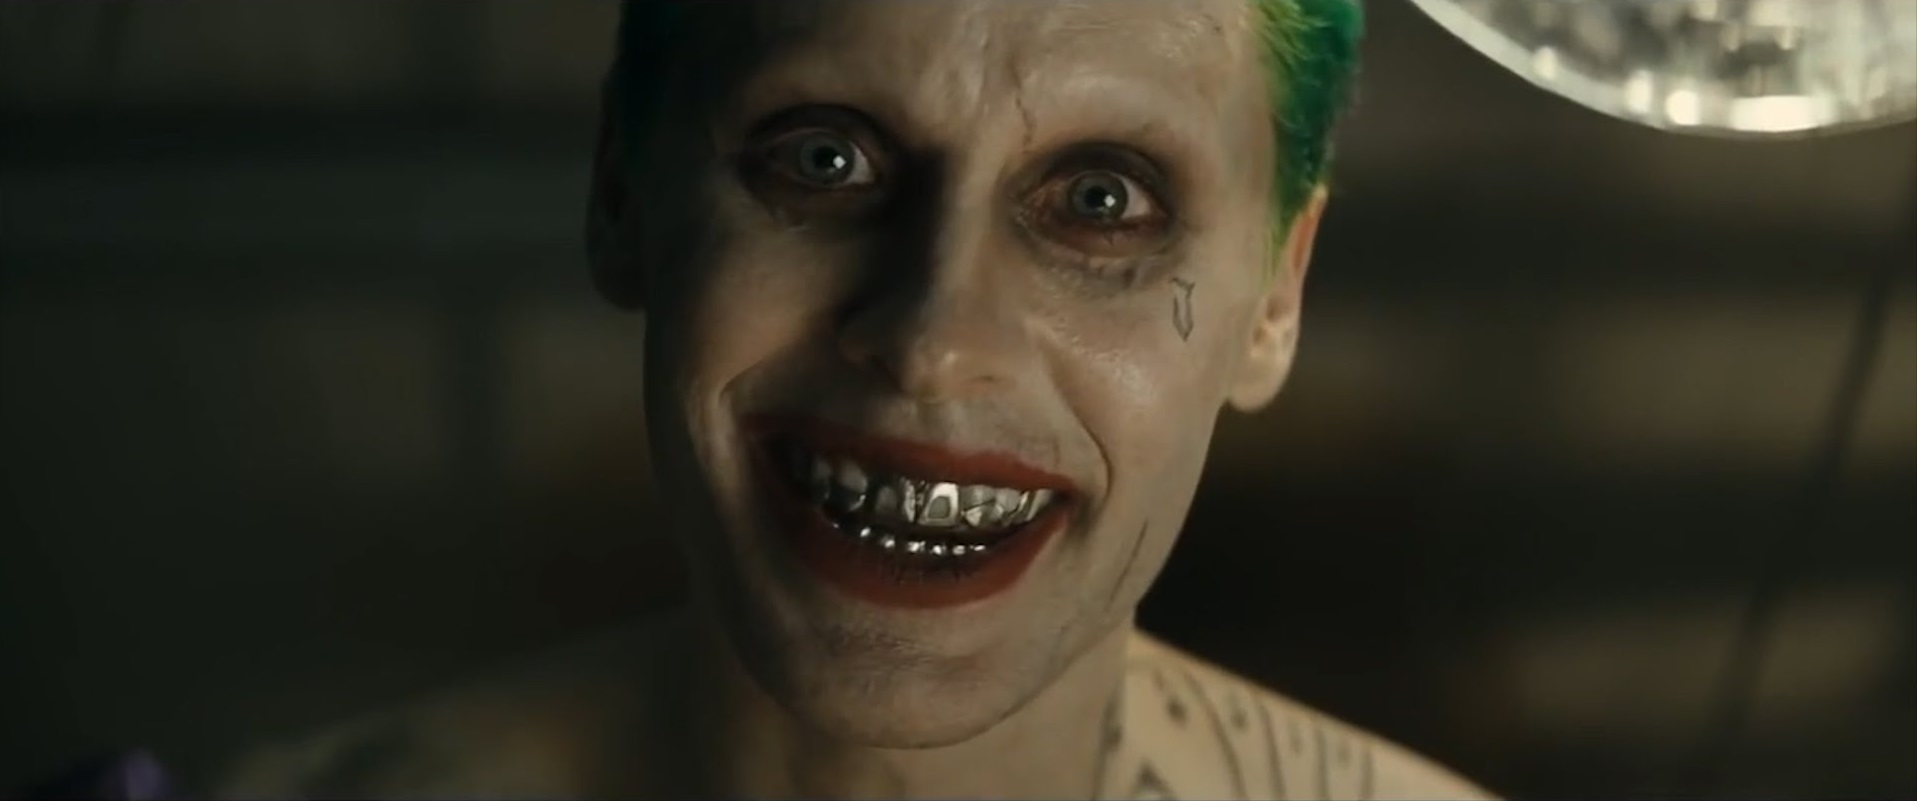 Batman v Superman Fan Theory: Jared Leto's Joker Is Joseph Gordon-Levitt From The Dark Knight Rises